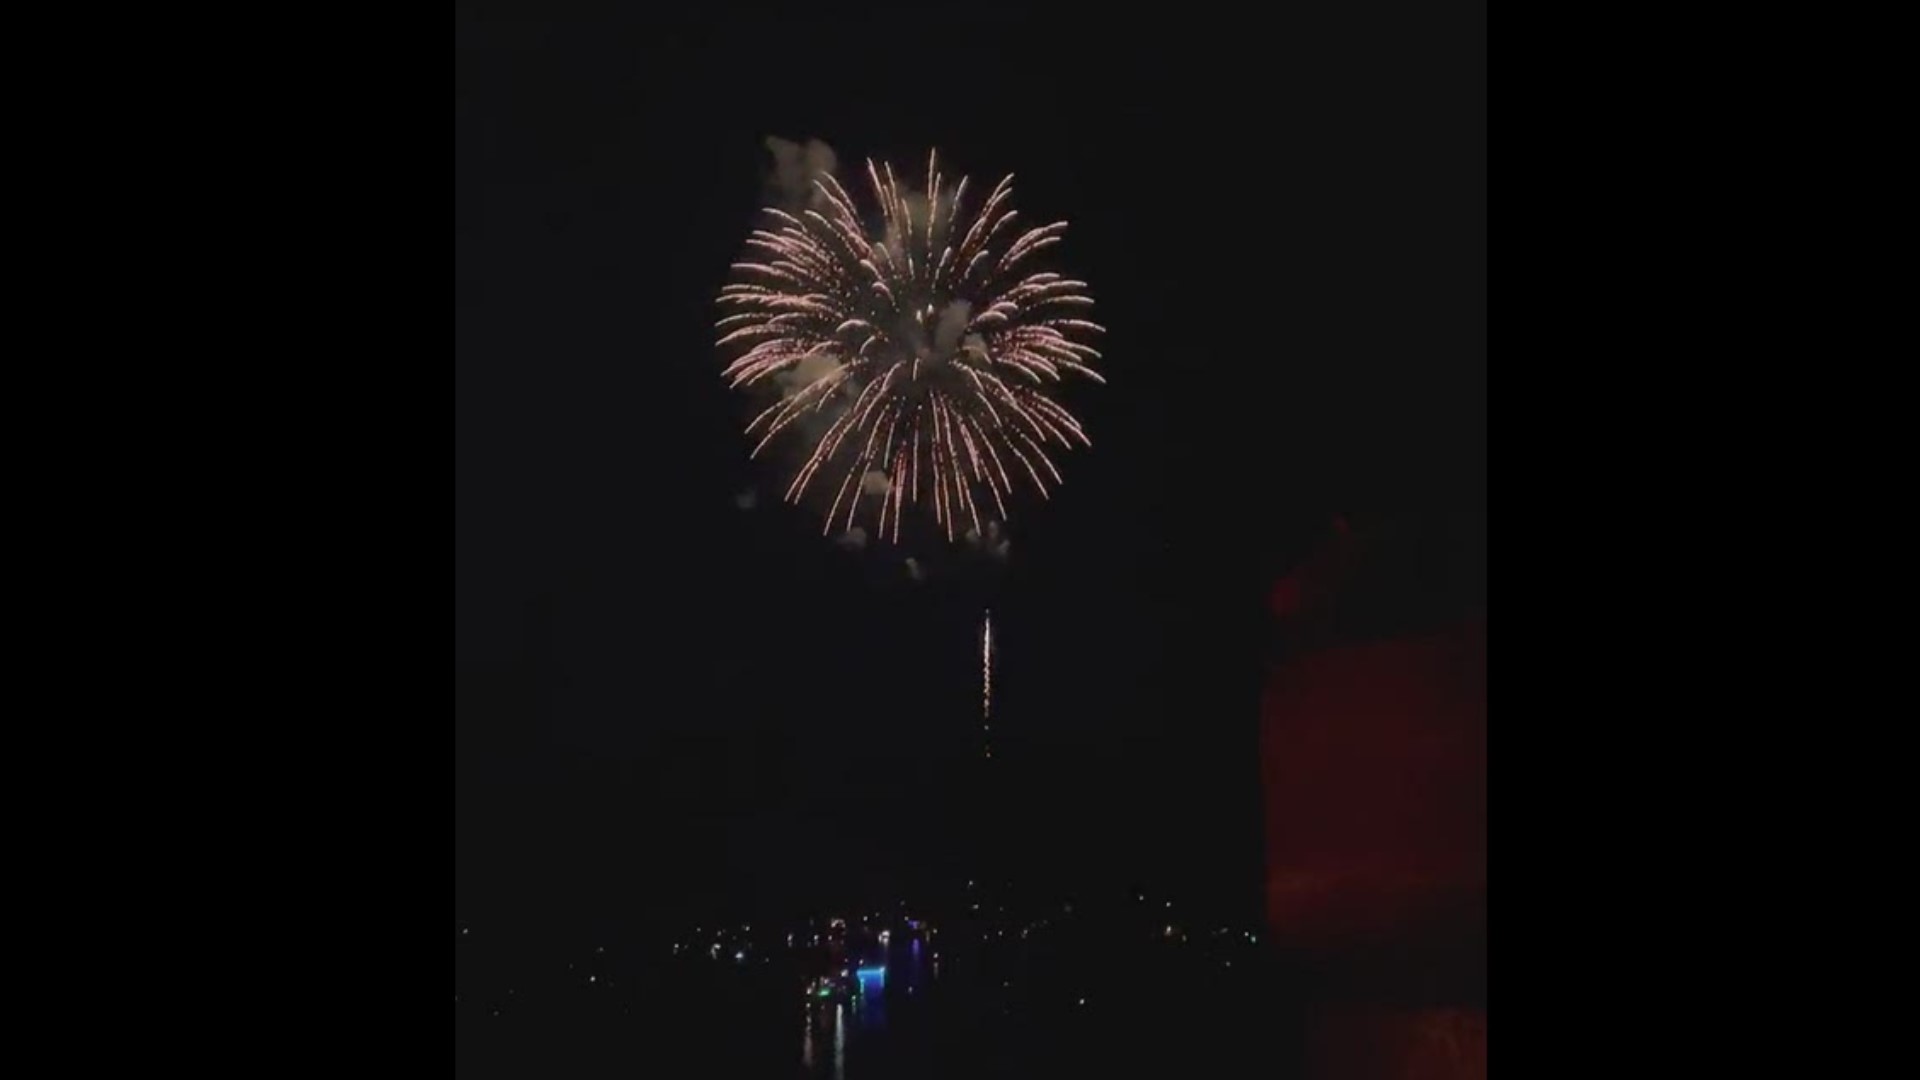 Grand Lake fireworks.
Credit: Lori Borchardt